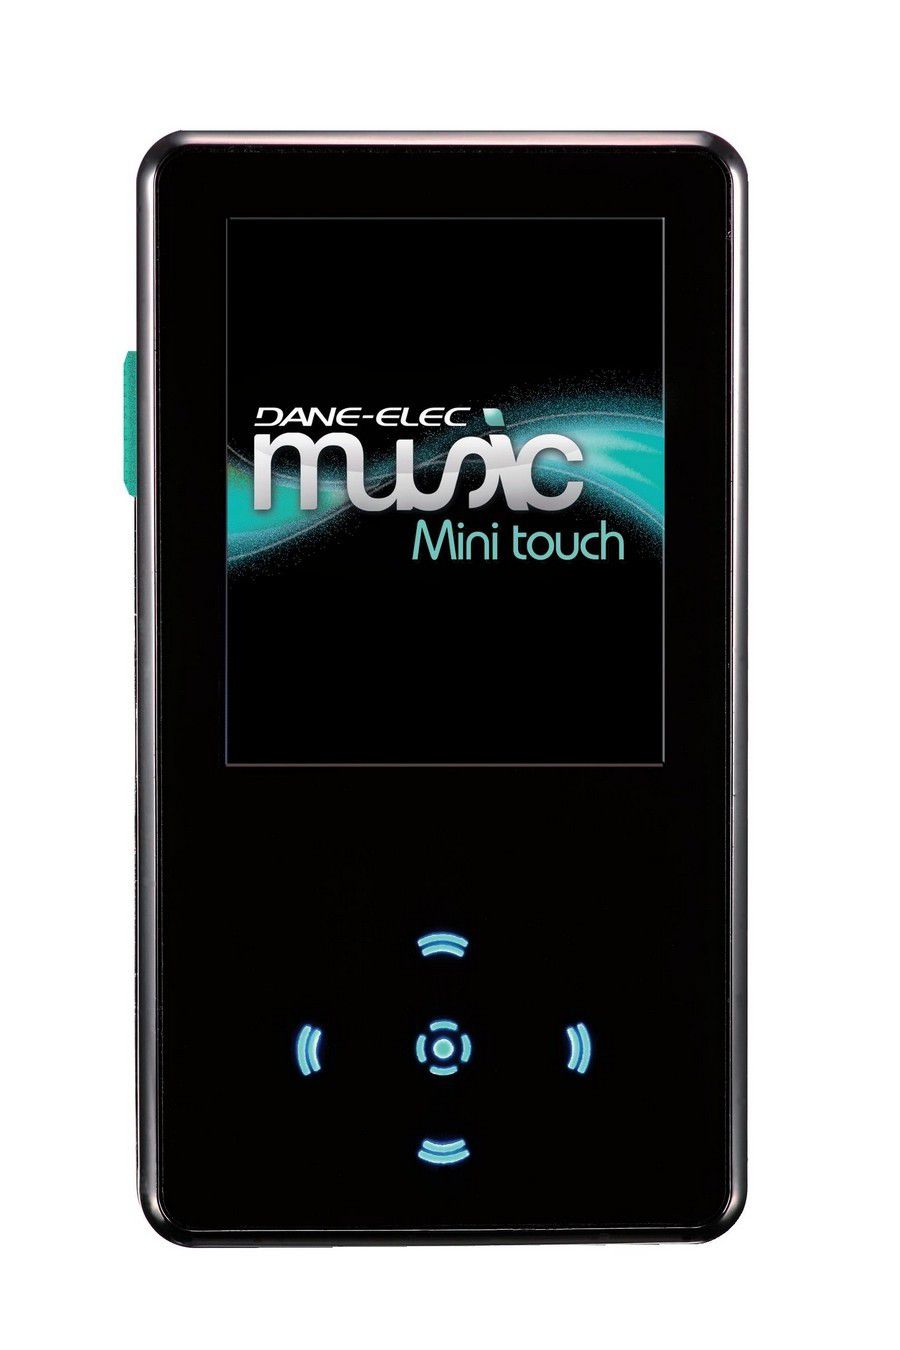 Dane-Elec Music Mini touch